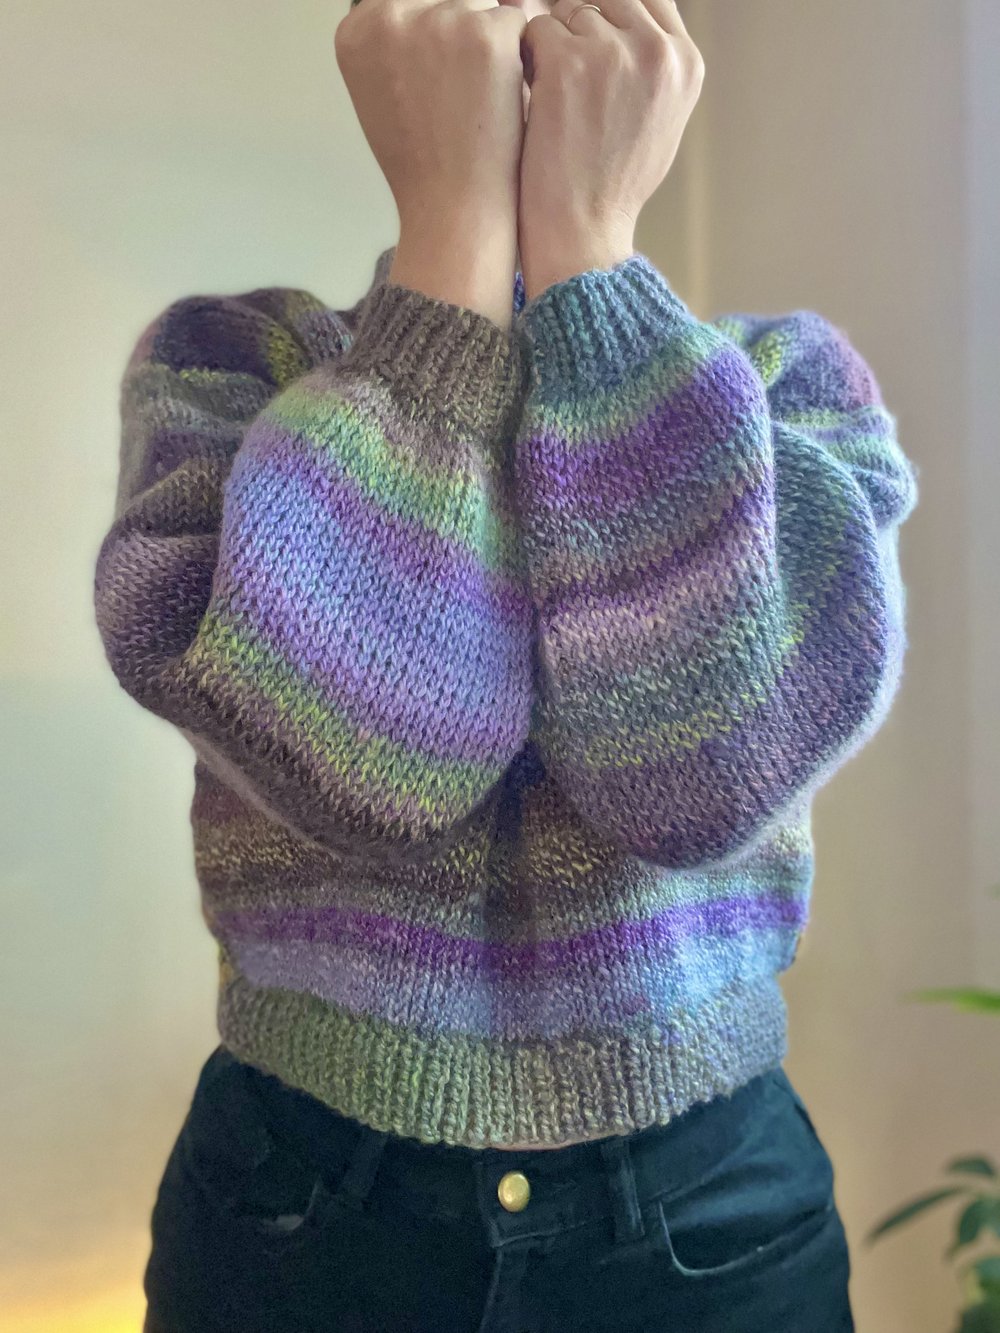 Not Knit Sweater: Tunisian Crochet Sweater Pattern — Just The Worsted |  Modern Crochet Patterns | Free Tunisian Crochet and Crochet Patterns